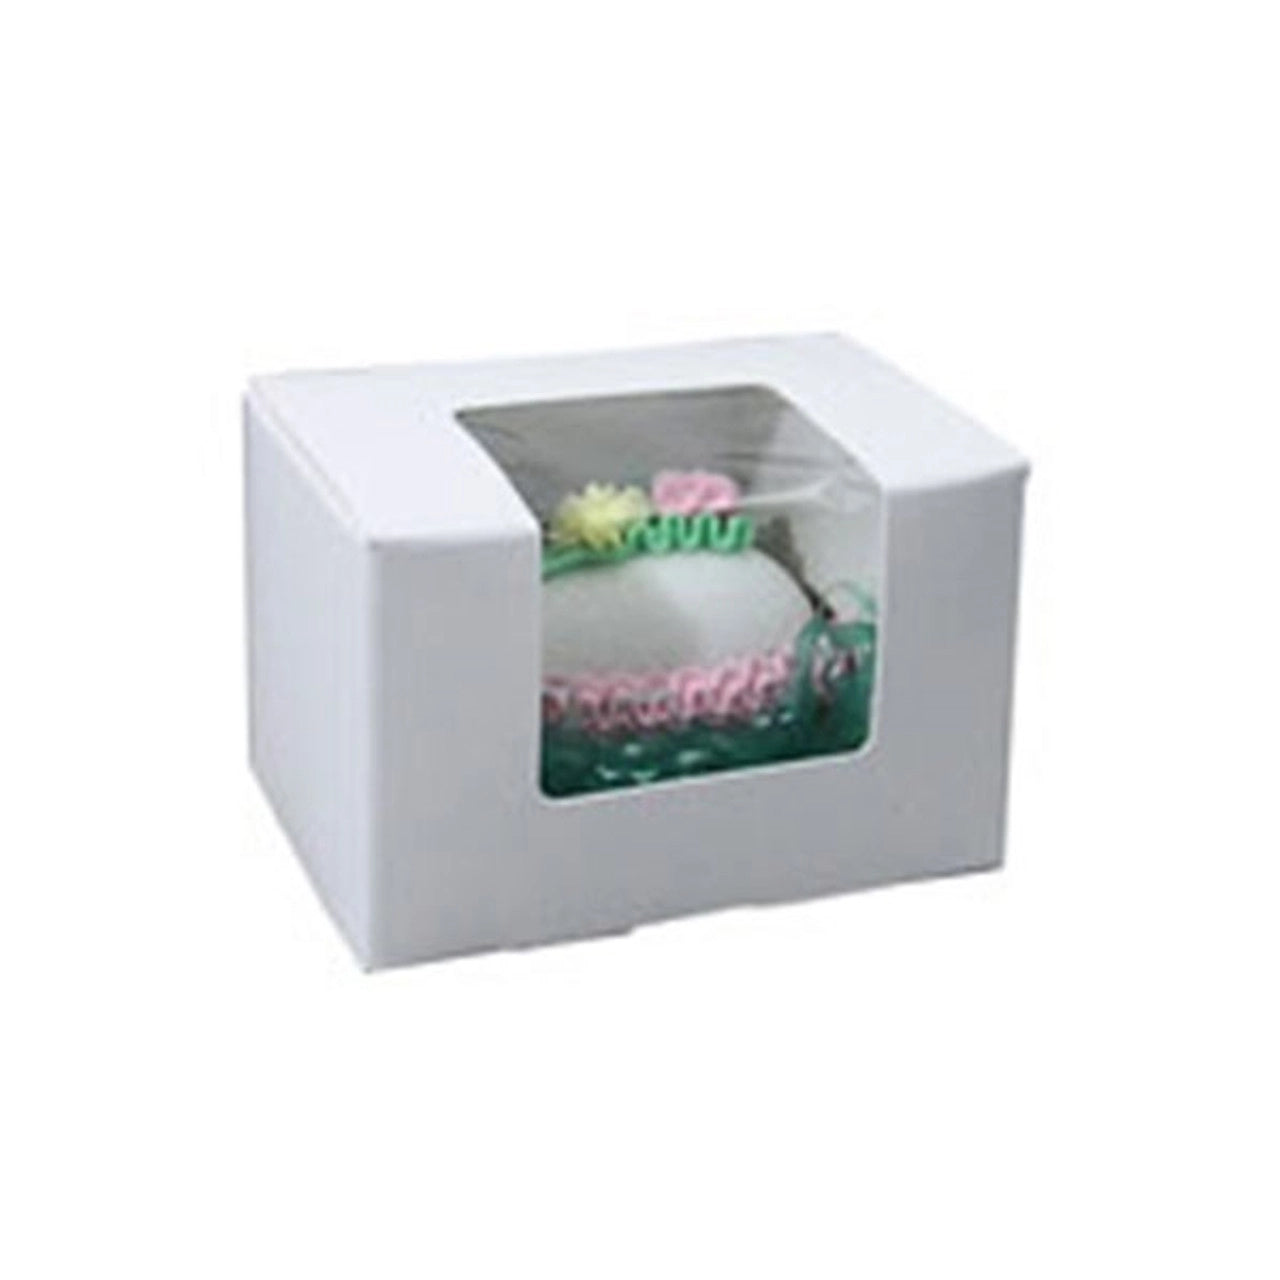 White, Easter Egg Candy Box, Quarter (.25) LB, 1 Piece Folding Box